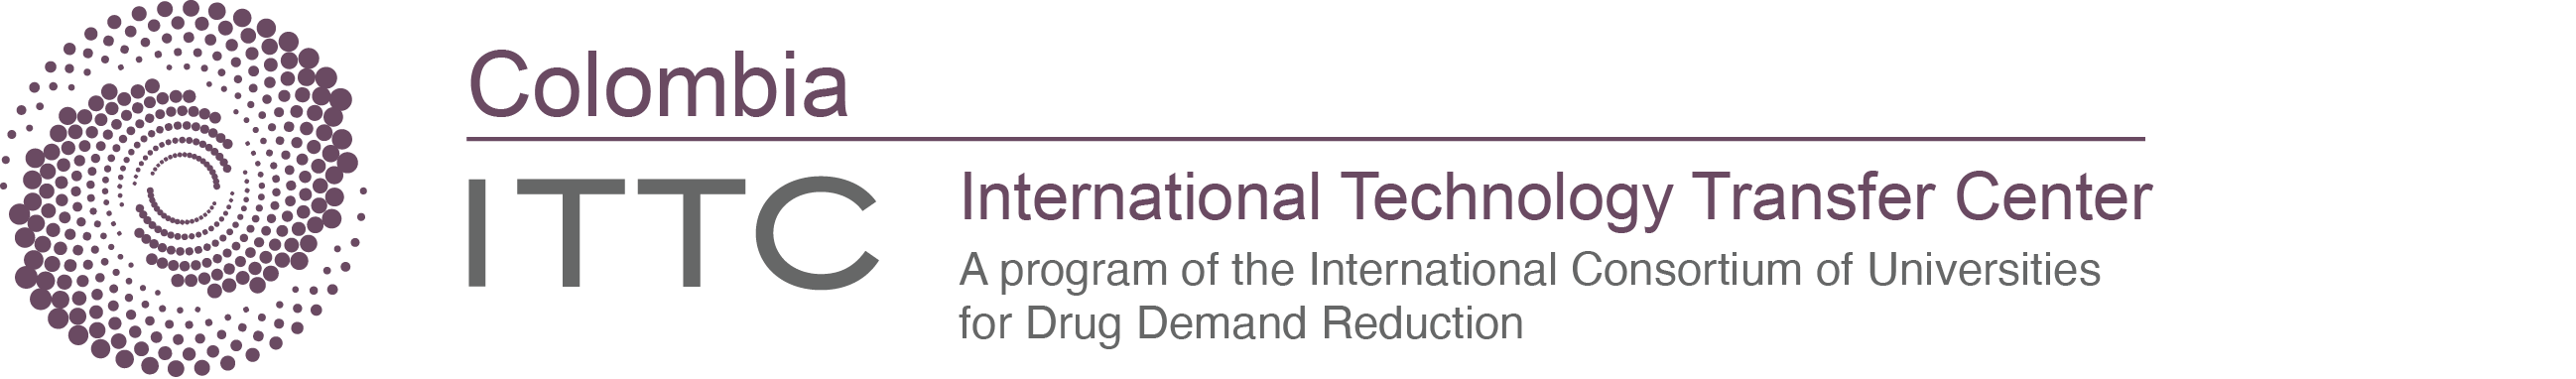 Colombia International Technology Transfer Center Logo